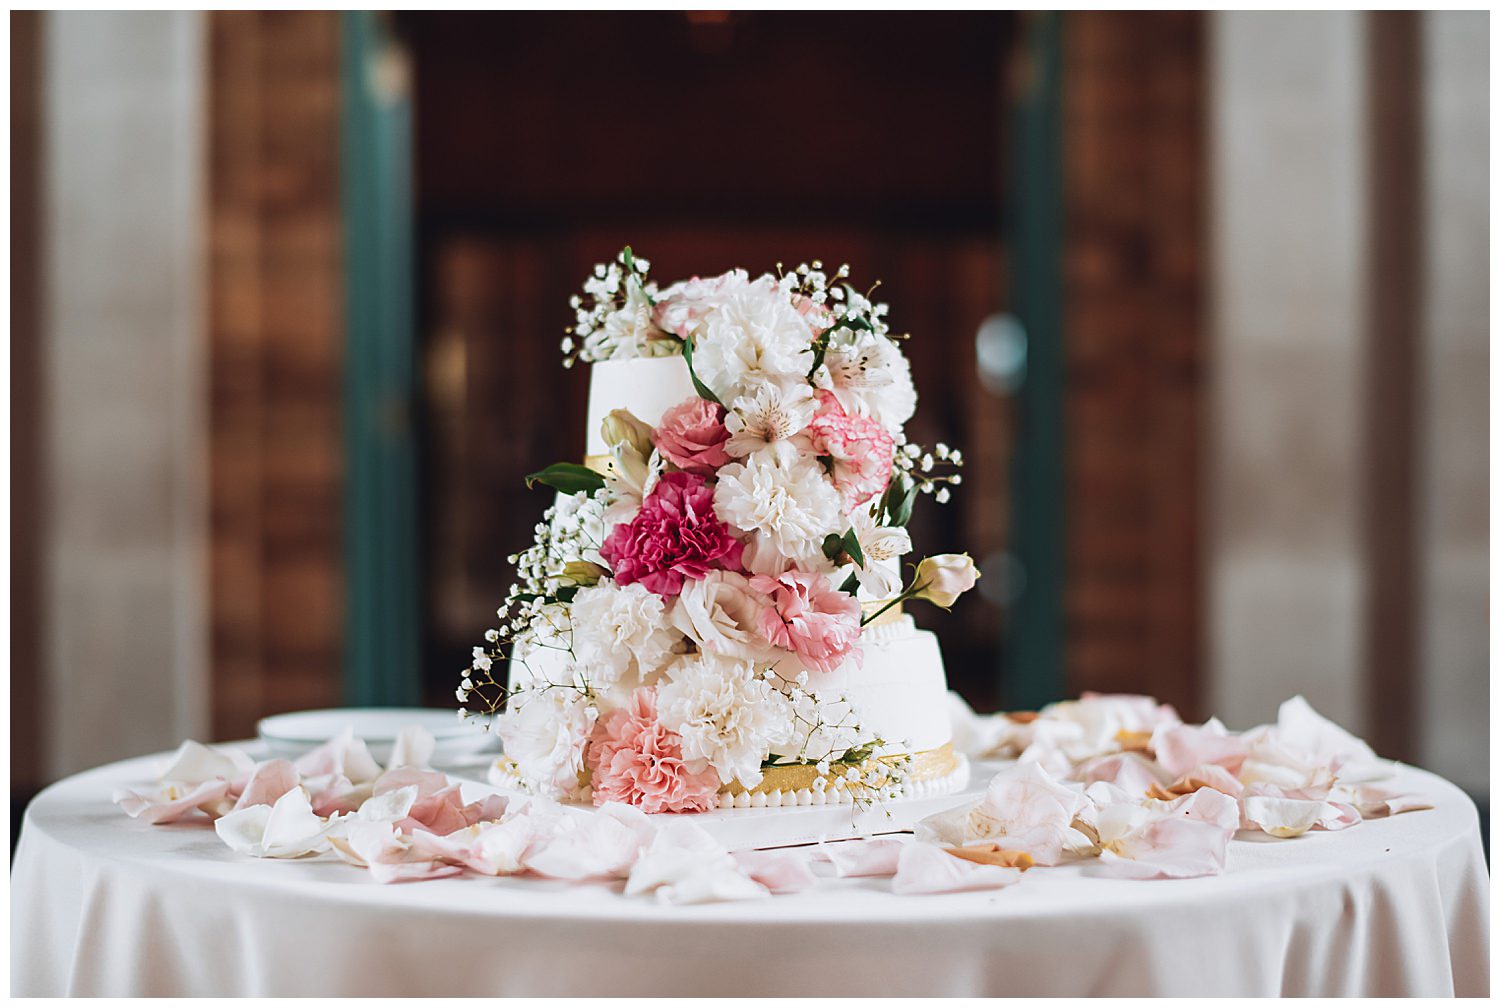 Columbus Park Refectory Wedding, reception space details, cake